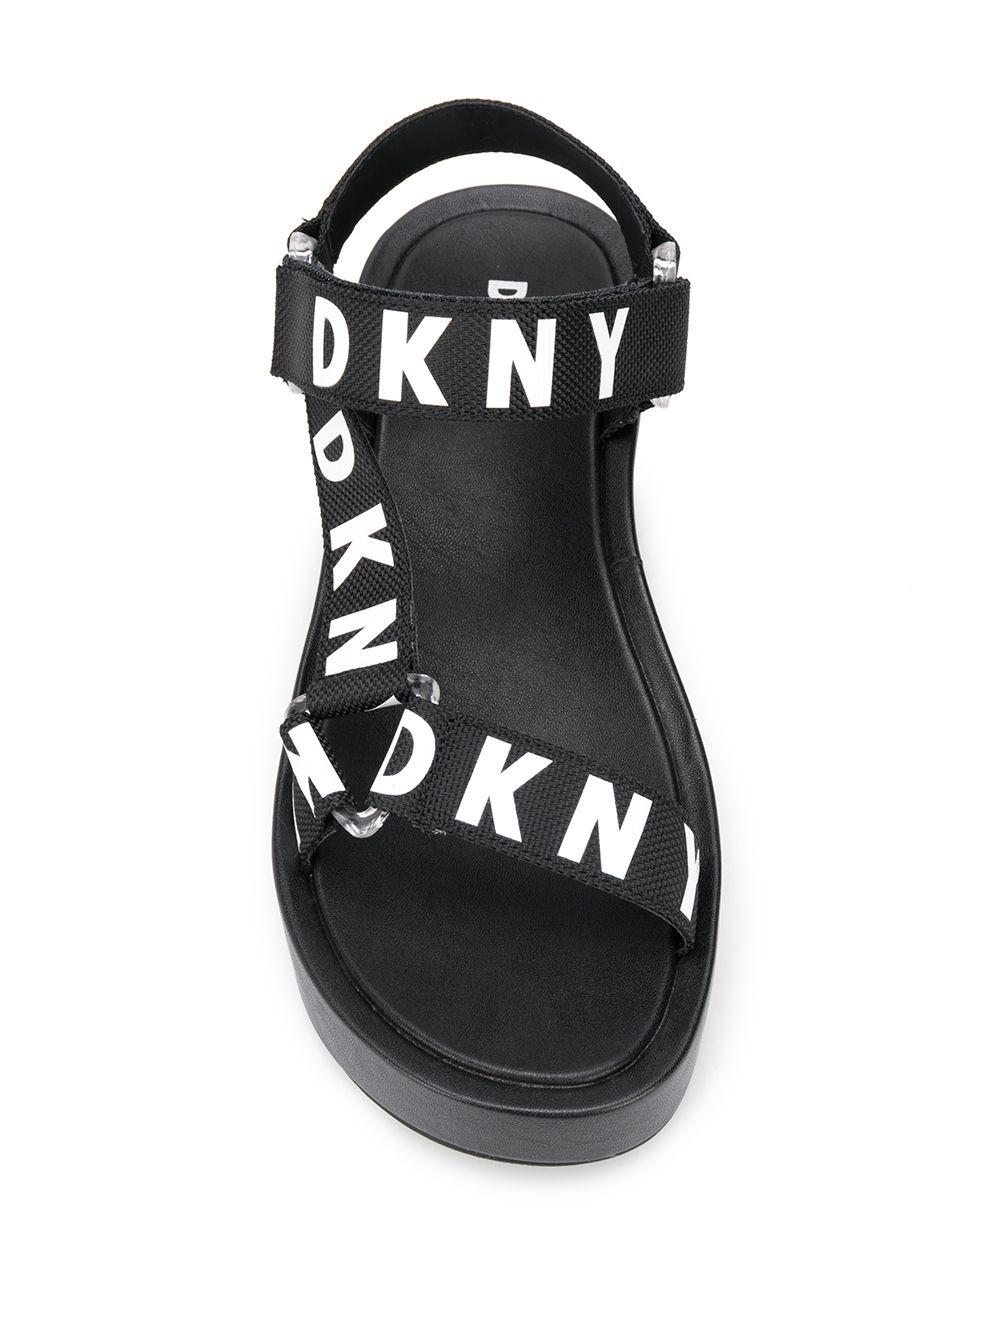 DKNY Logo Platform Sandals in Black | Lyst